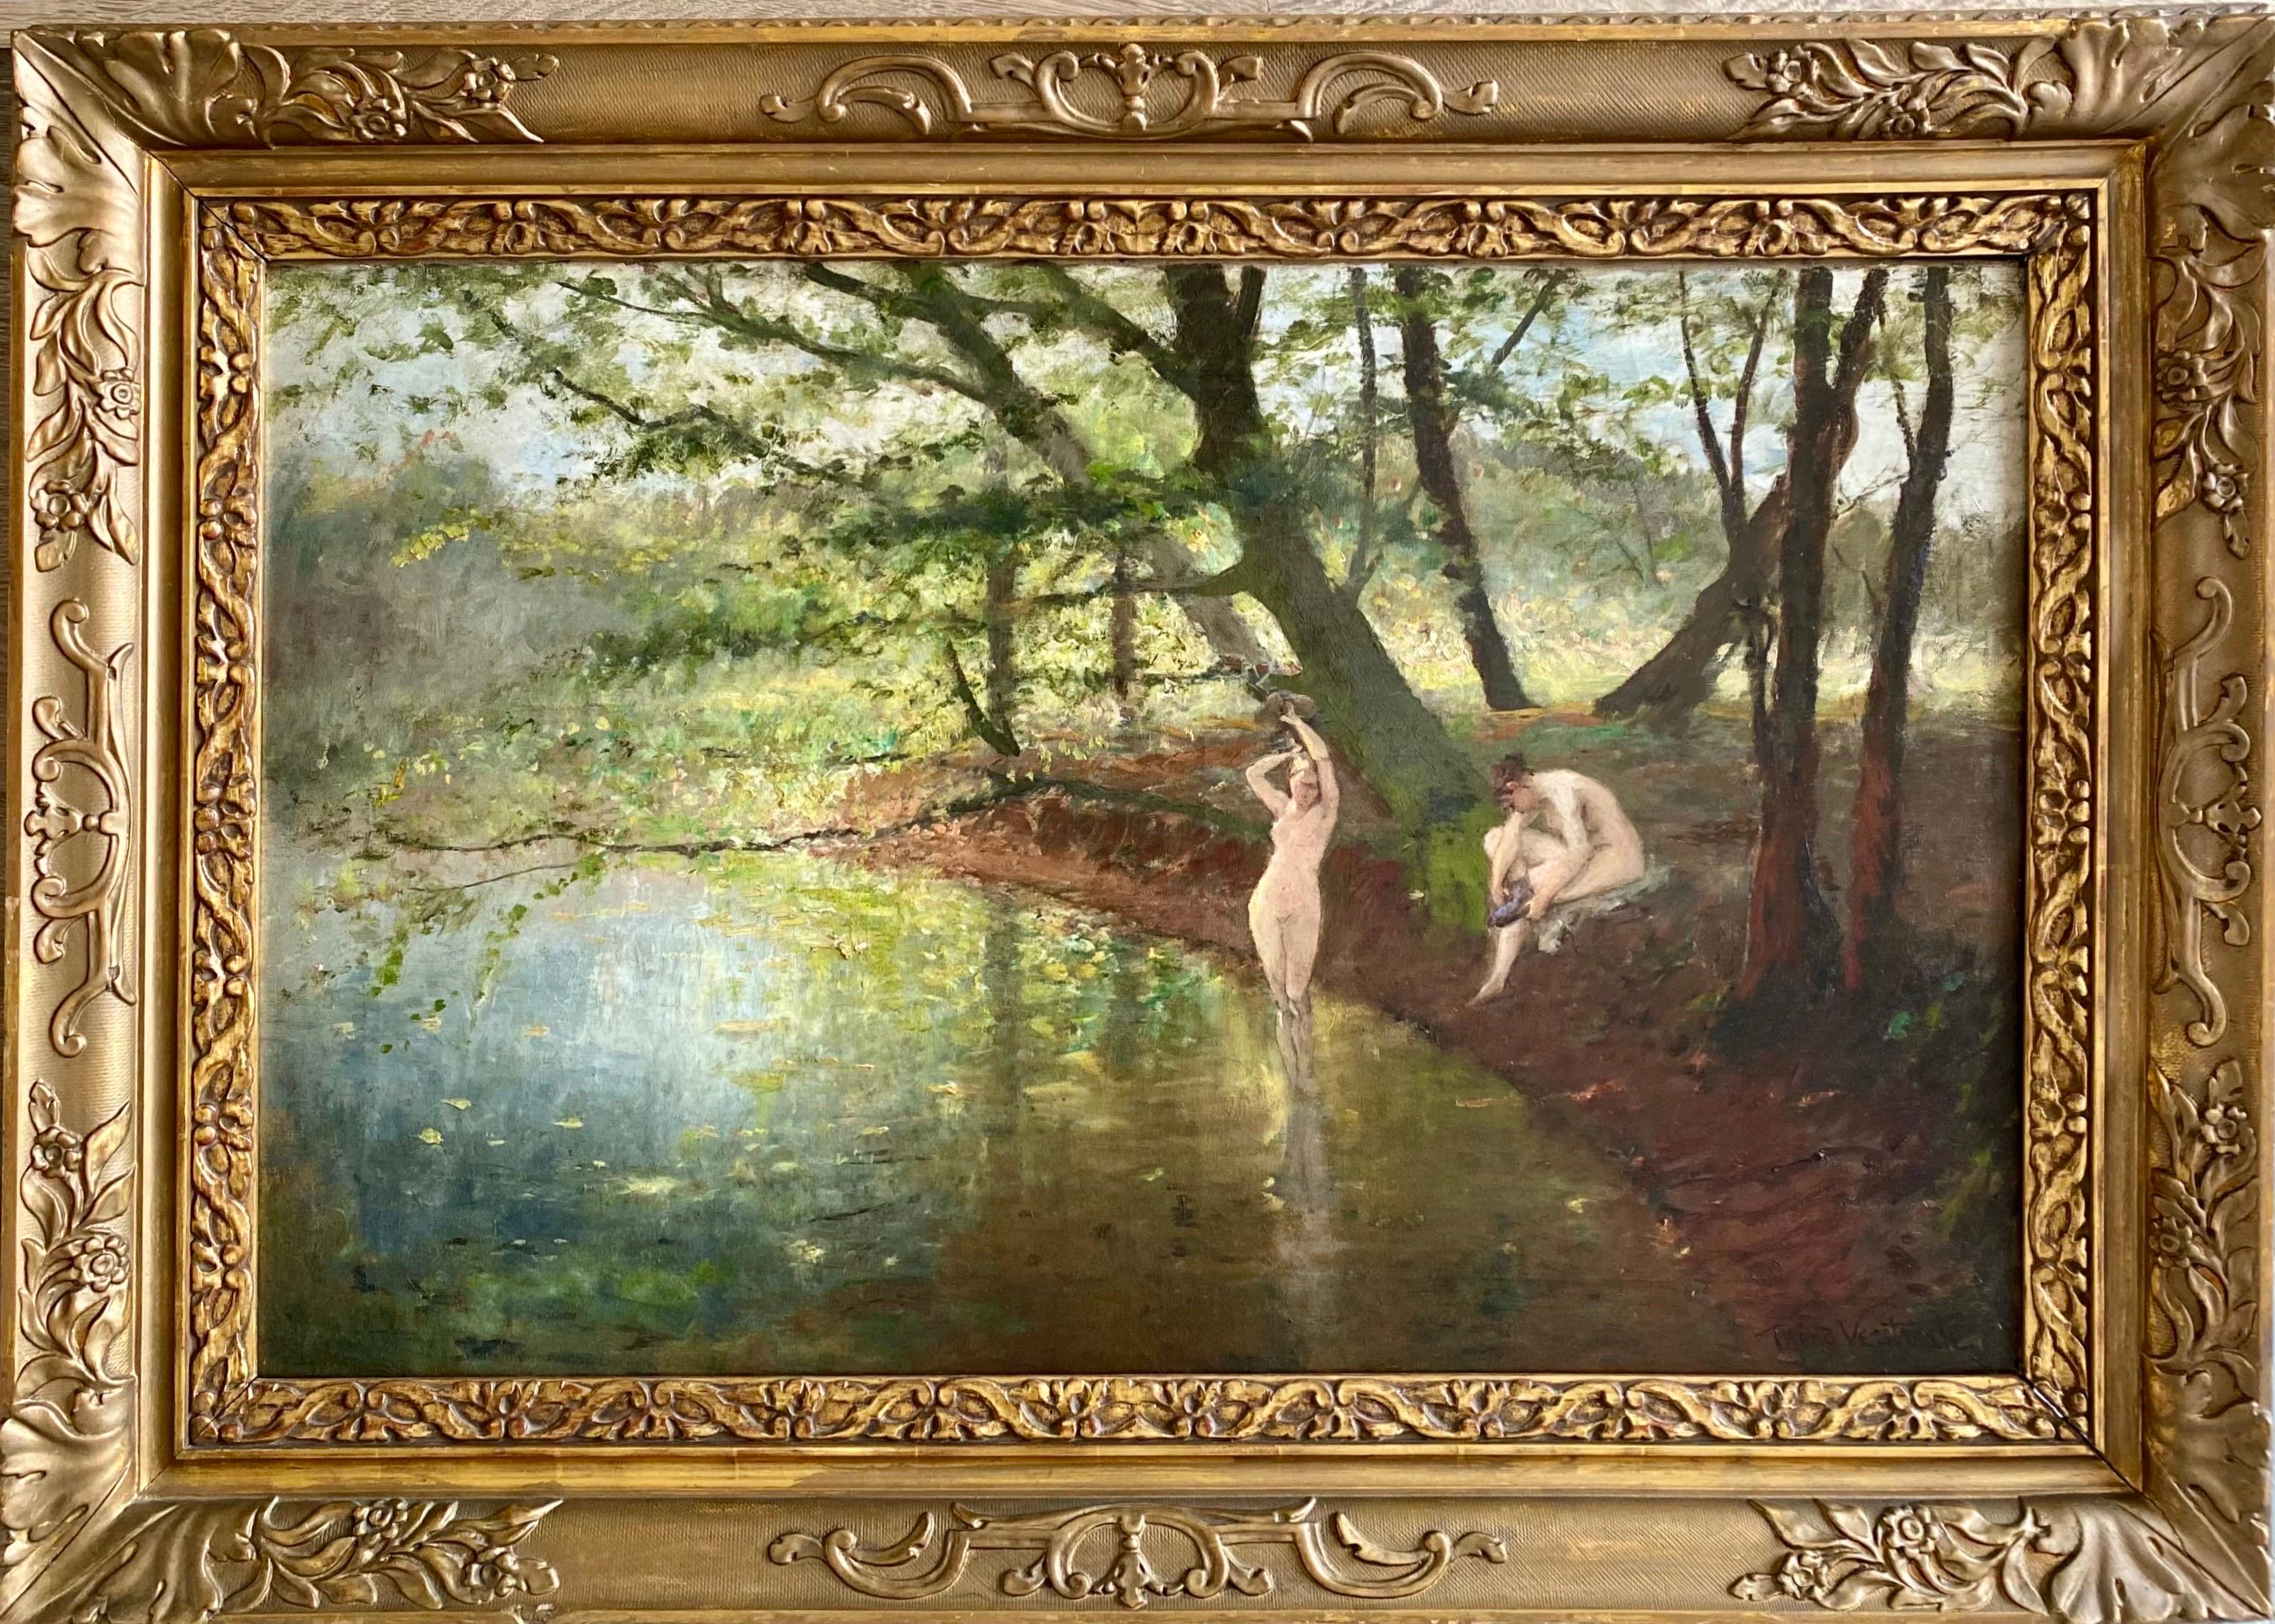 Theodoor Verstraete Landscape Painting - 19th century impressionist painting - Les Baigneuses - Nude forest barbizon